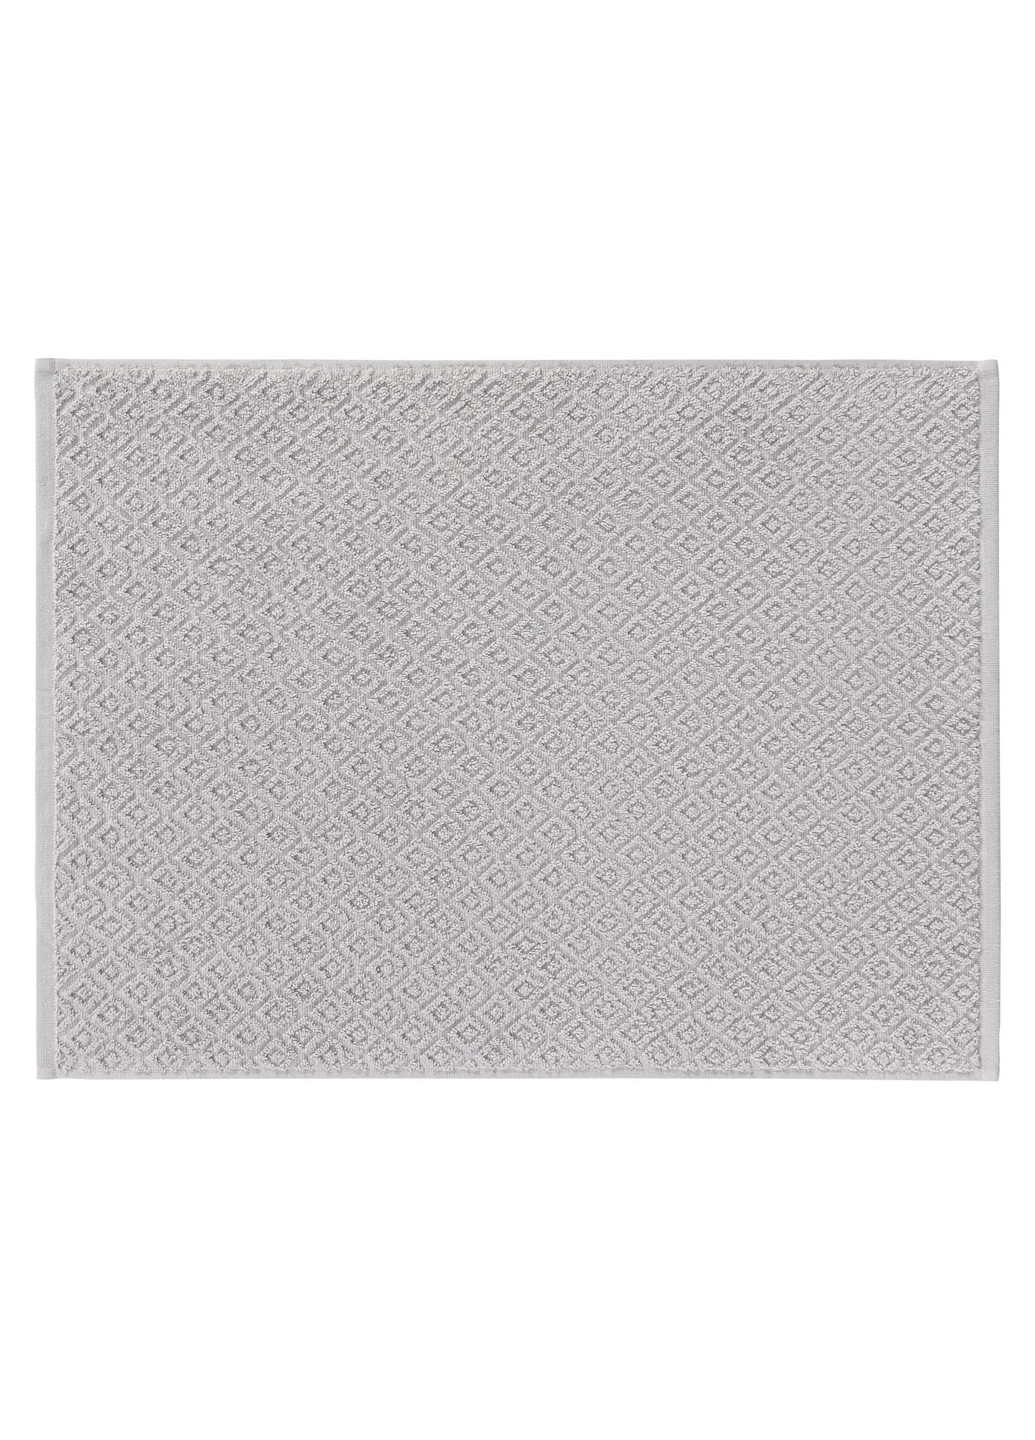 Livarno home полотенца для ног (4 шт) серый производство - Германия